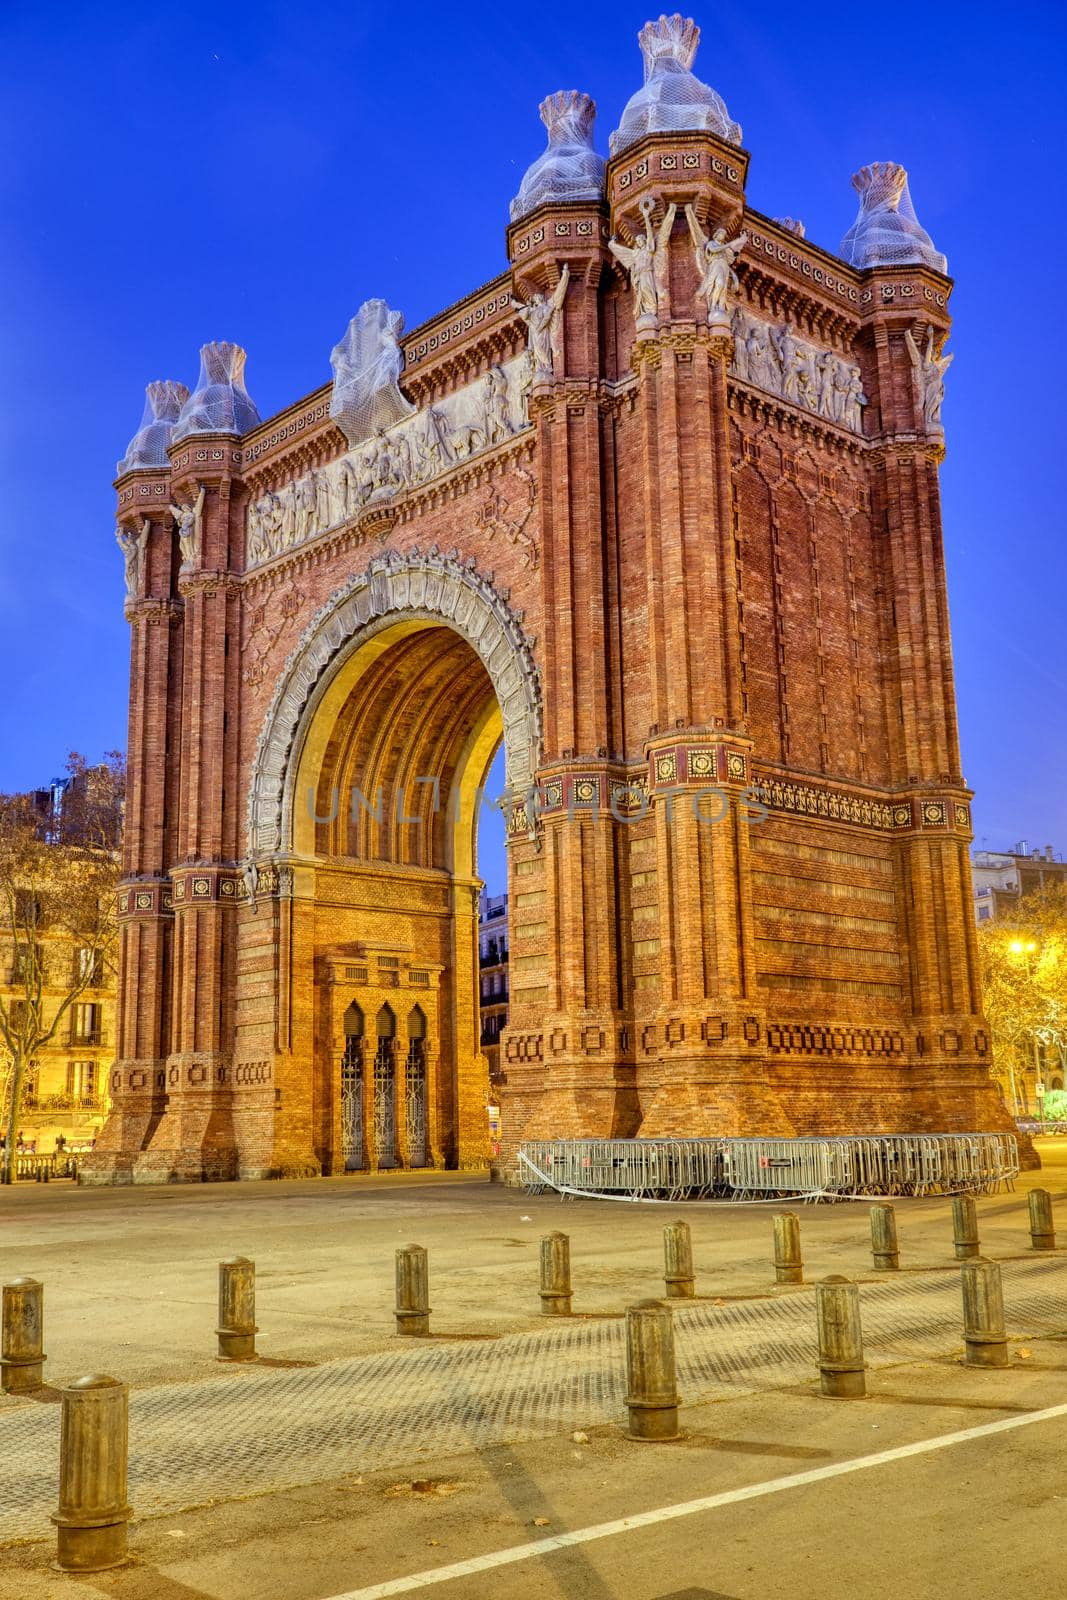 The Arc de Triomf in Barcelona by elxeneize